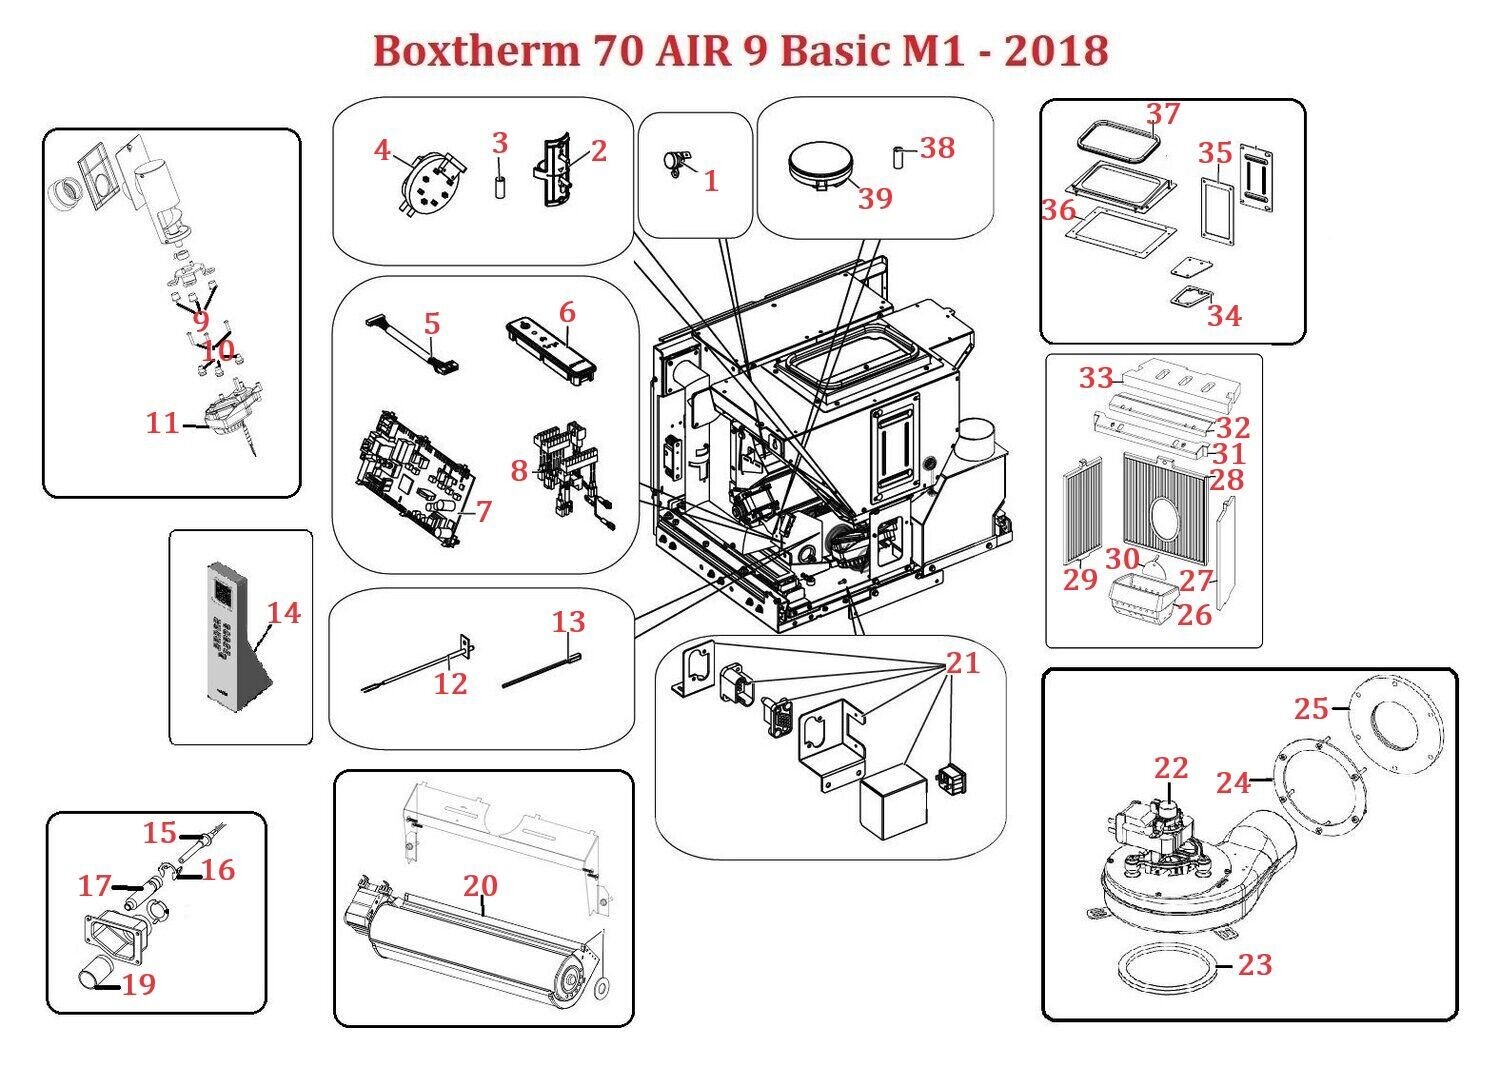 Boxtherm 70 AIR 9 Basic M1 - 2018